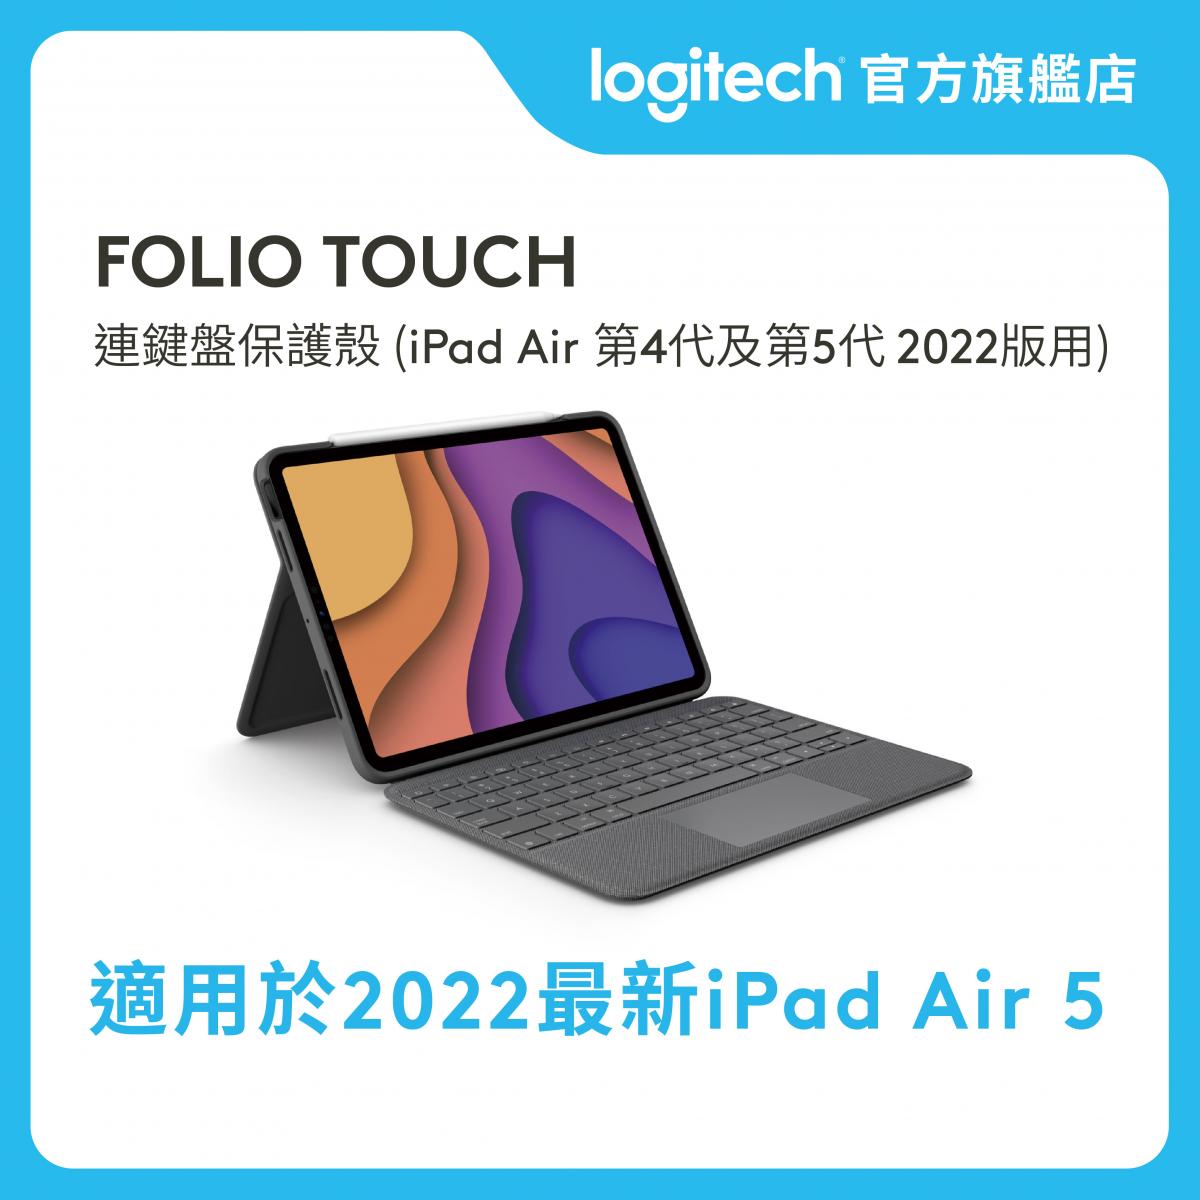 Logitech | Folio Touch 保護殼(iPad Air第4代用11吋) 官方行貨| 尺碼 